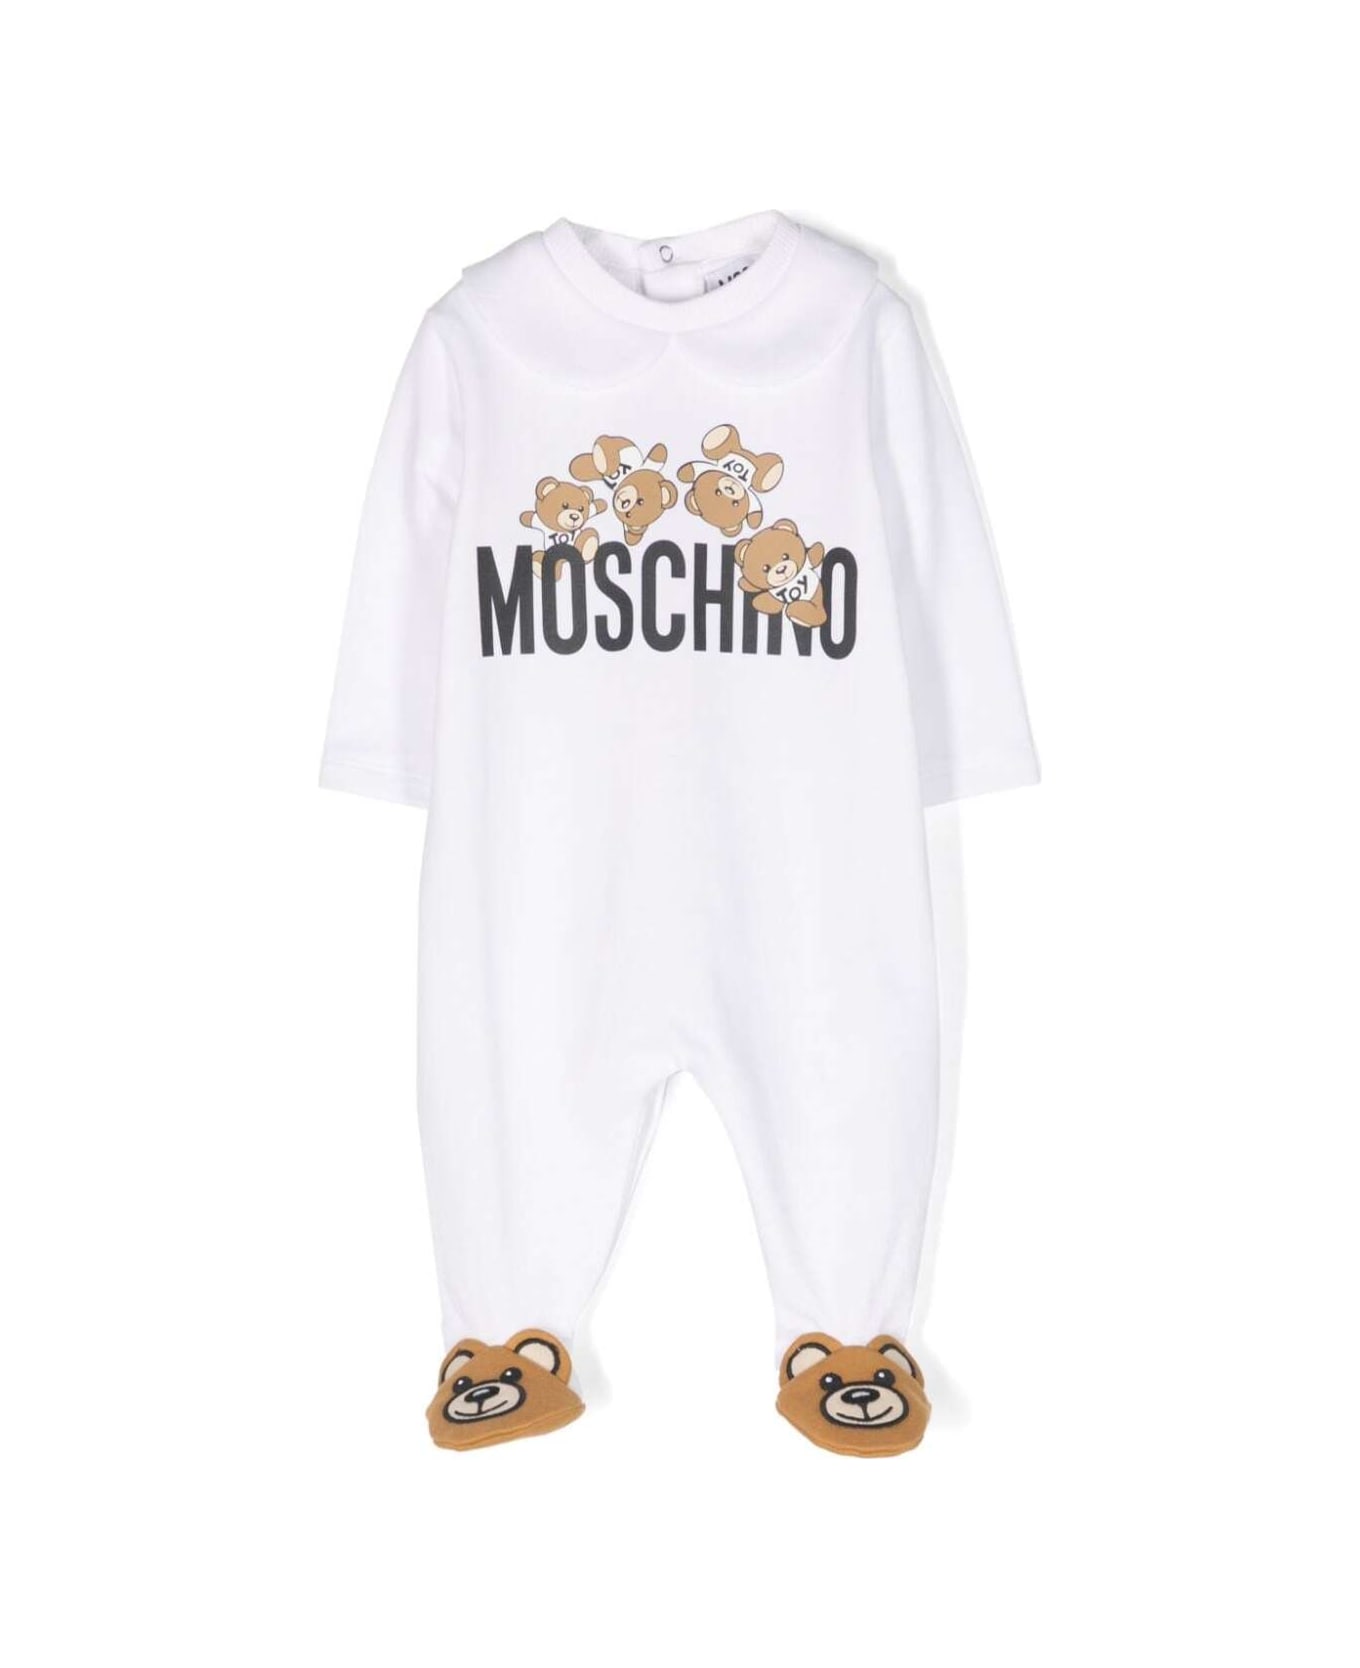 Moschino White Onesie With Teddy Bear Print In Cotton Baby - White